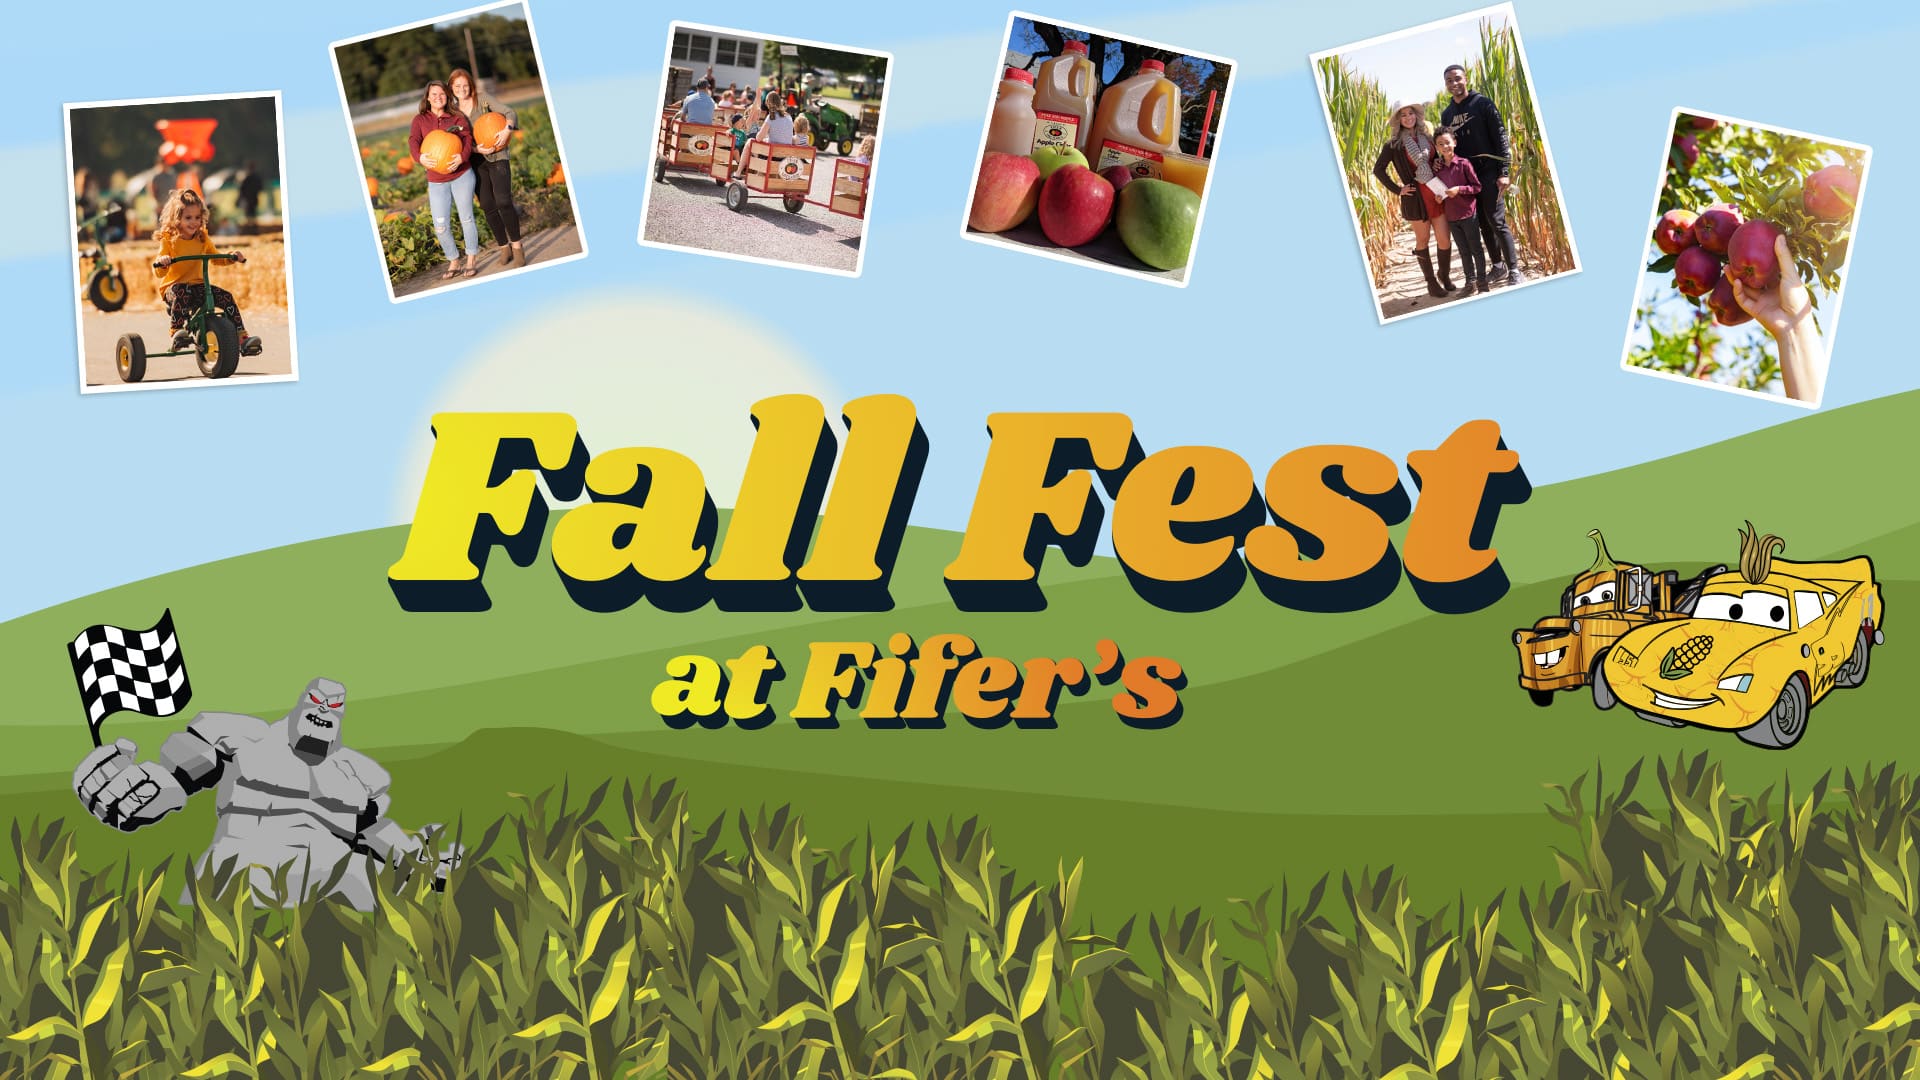 Fall-Fest-Motor-Maze-Fifer-Orchards